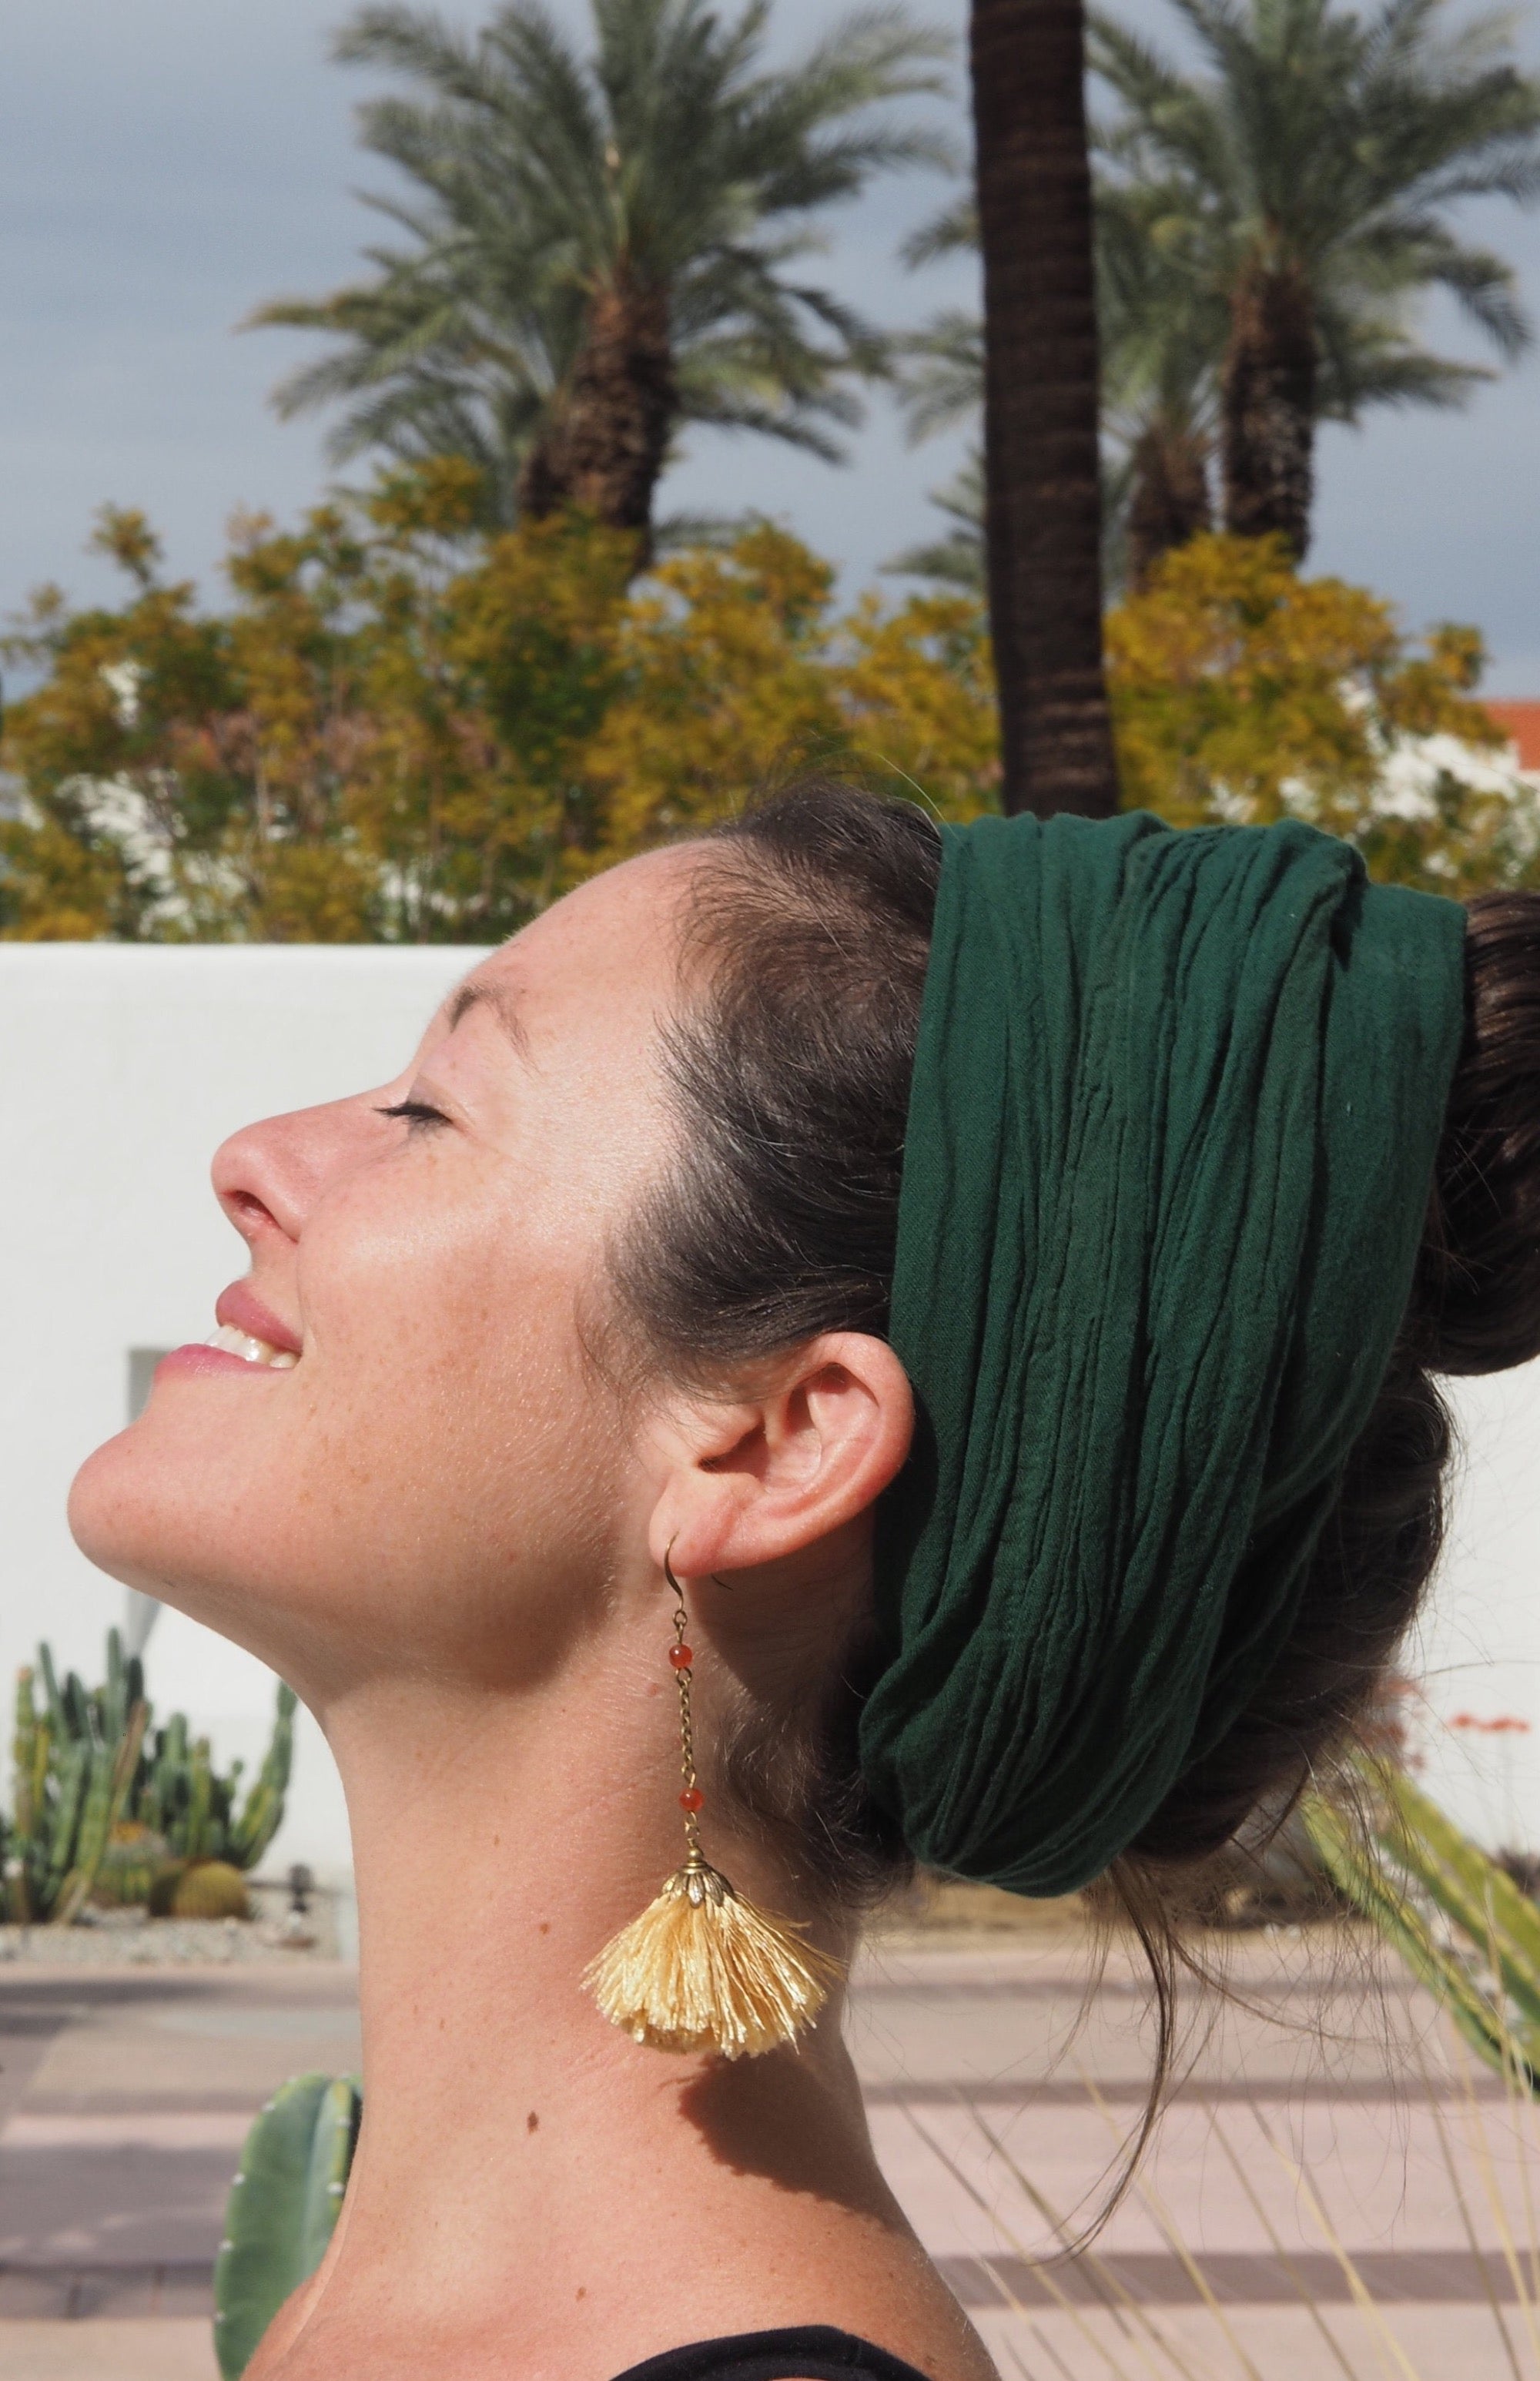 Woman has sun wrap in hair